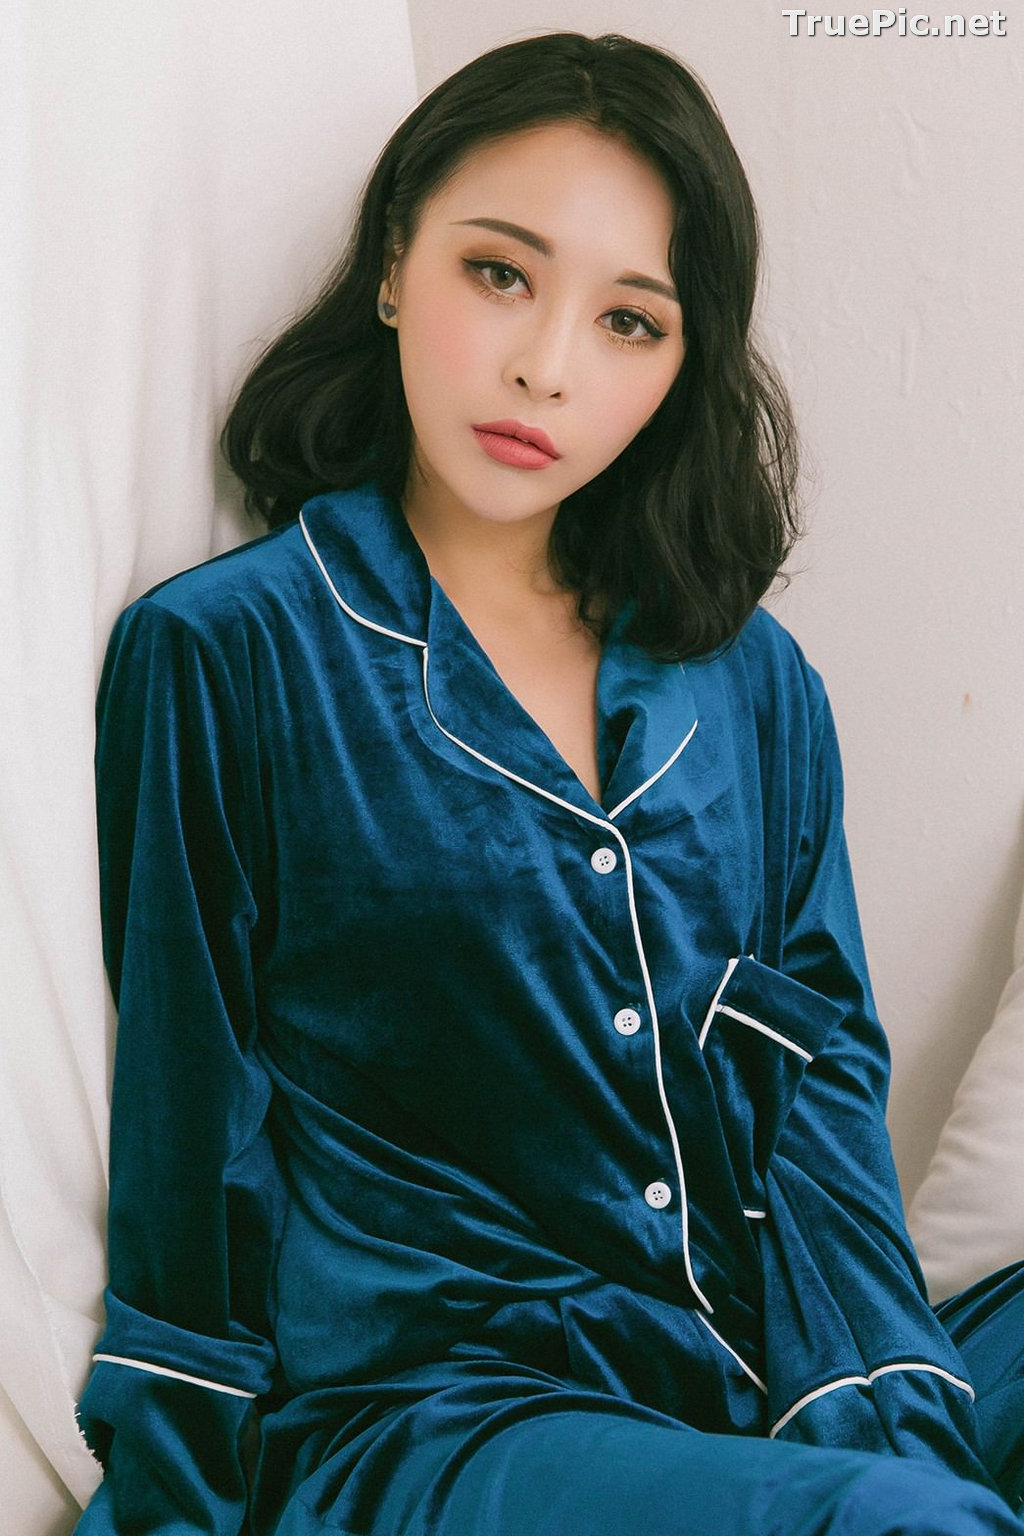 Image Ryu Hyeonju - Korean Fashion Model - Pijama and Lingerie Set - TruePic.net - Picture-41